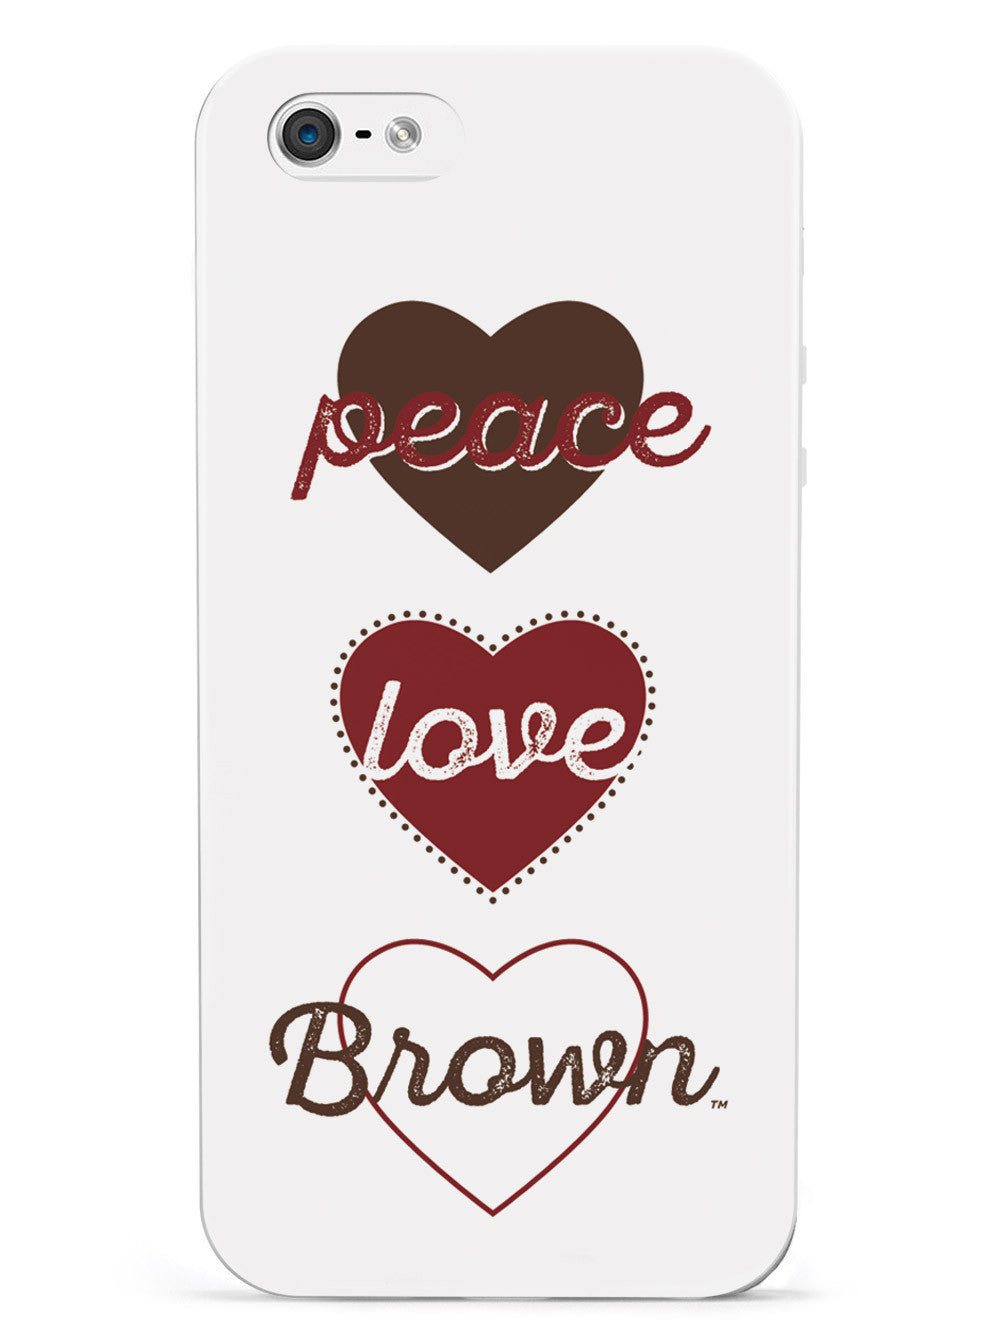 Peace, Love, Brown Case